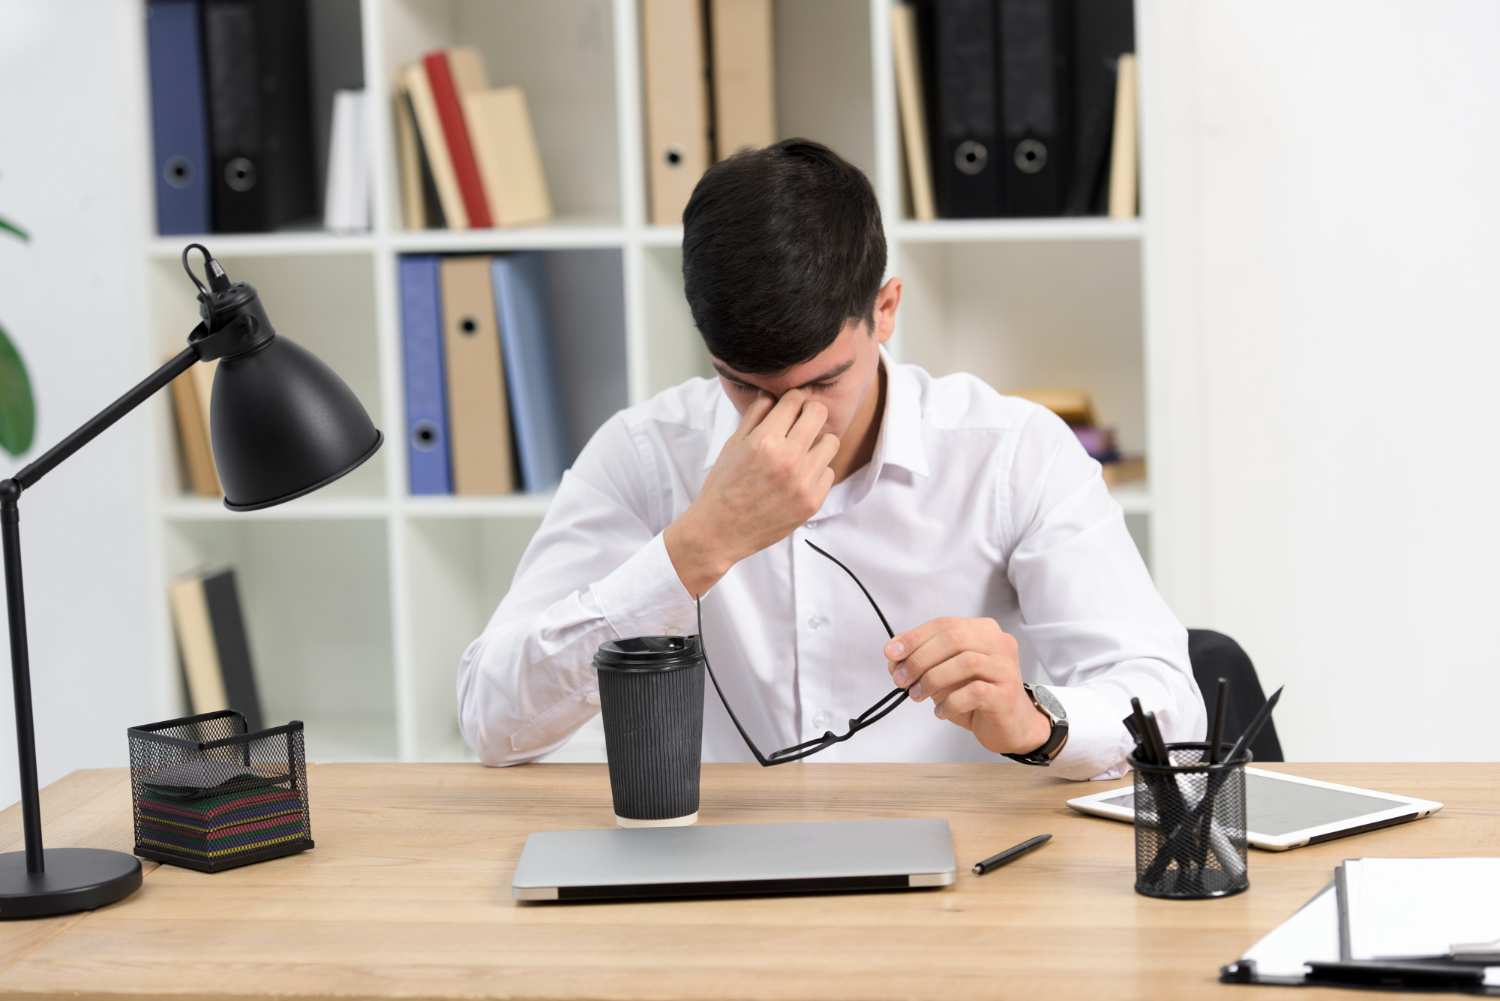 Kenali Ciri-ciri Burnout di Tempat Kerja